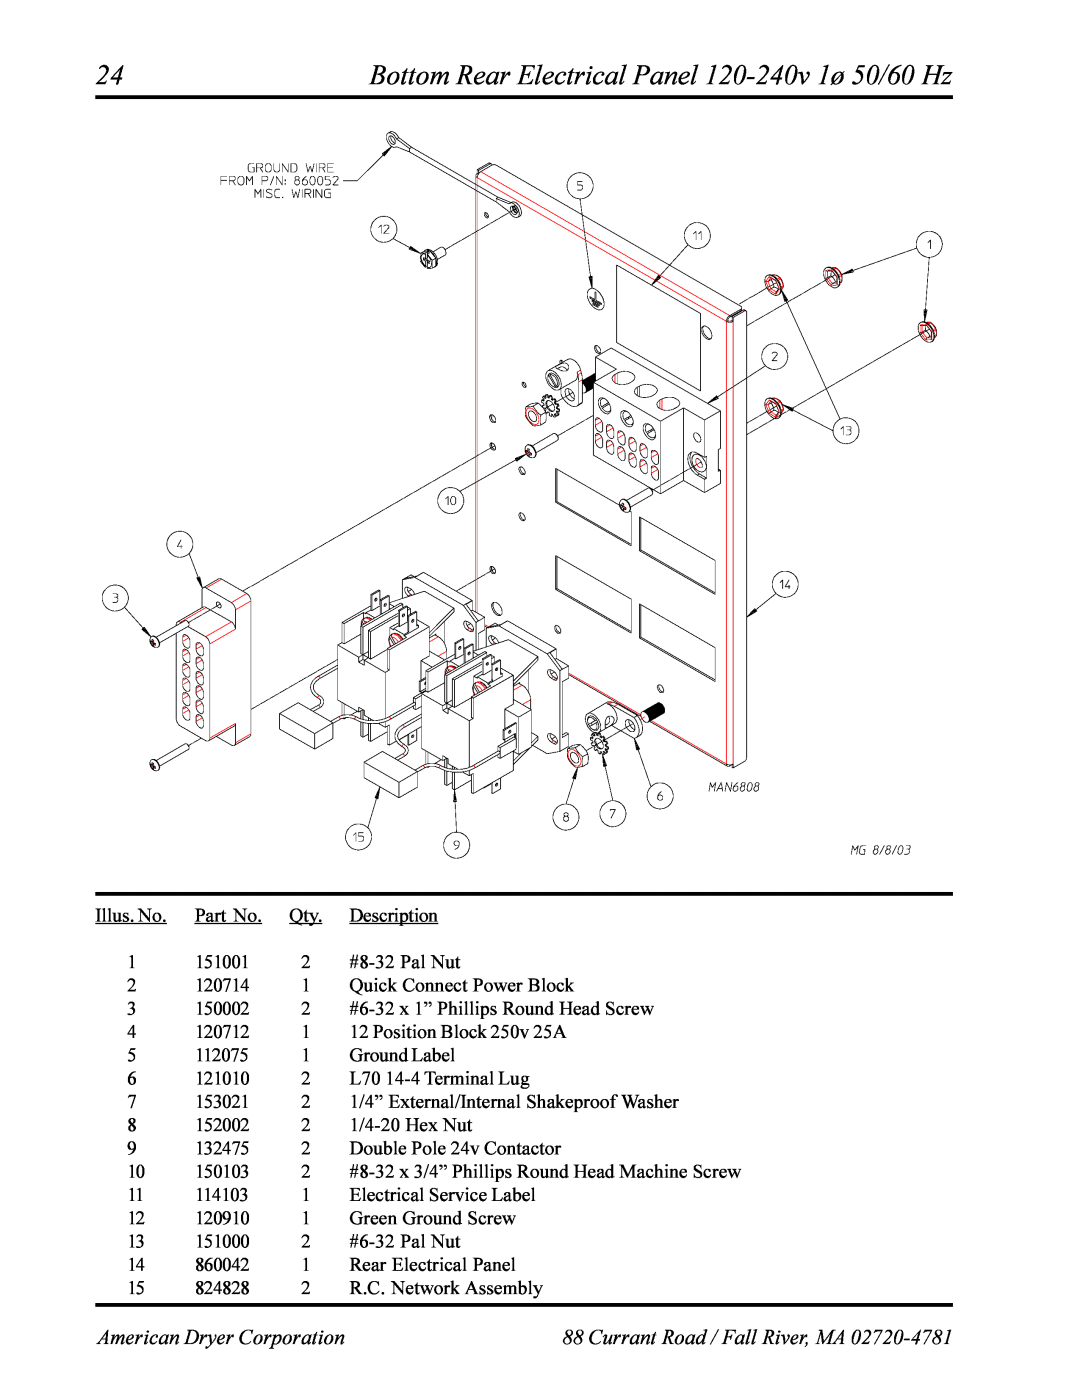 American Dryer Corp AD-360X2RD manual Bottom Rear Electrical Panel 120-240v 1ø 50/60 Hz, American Dryer Corporation 